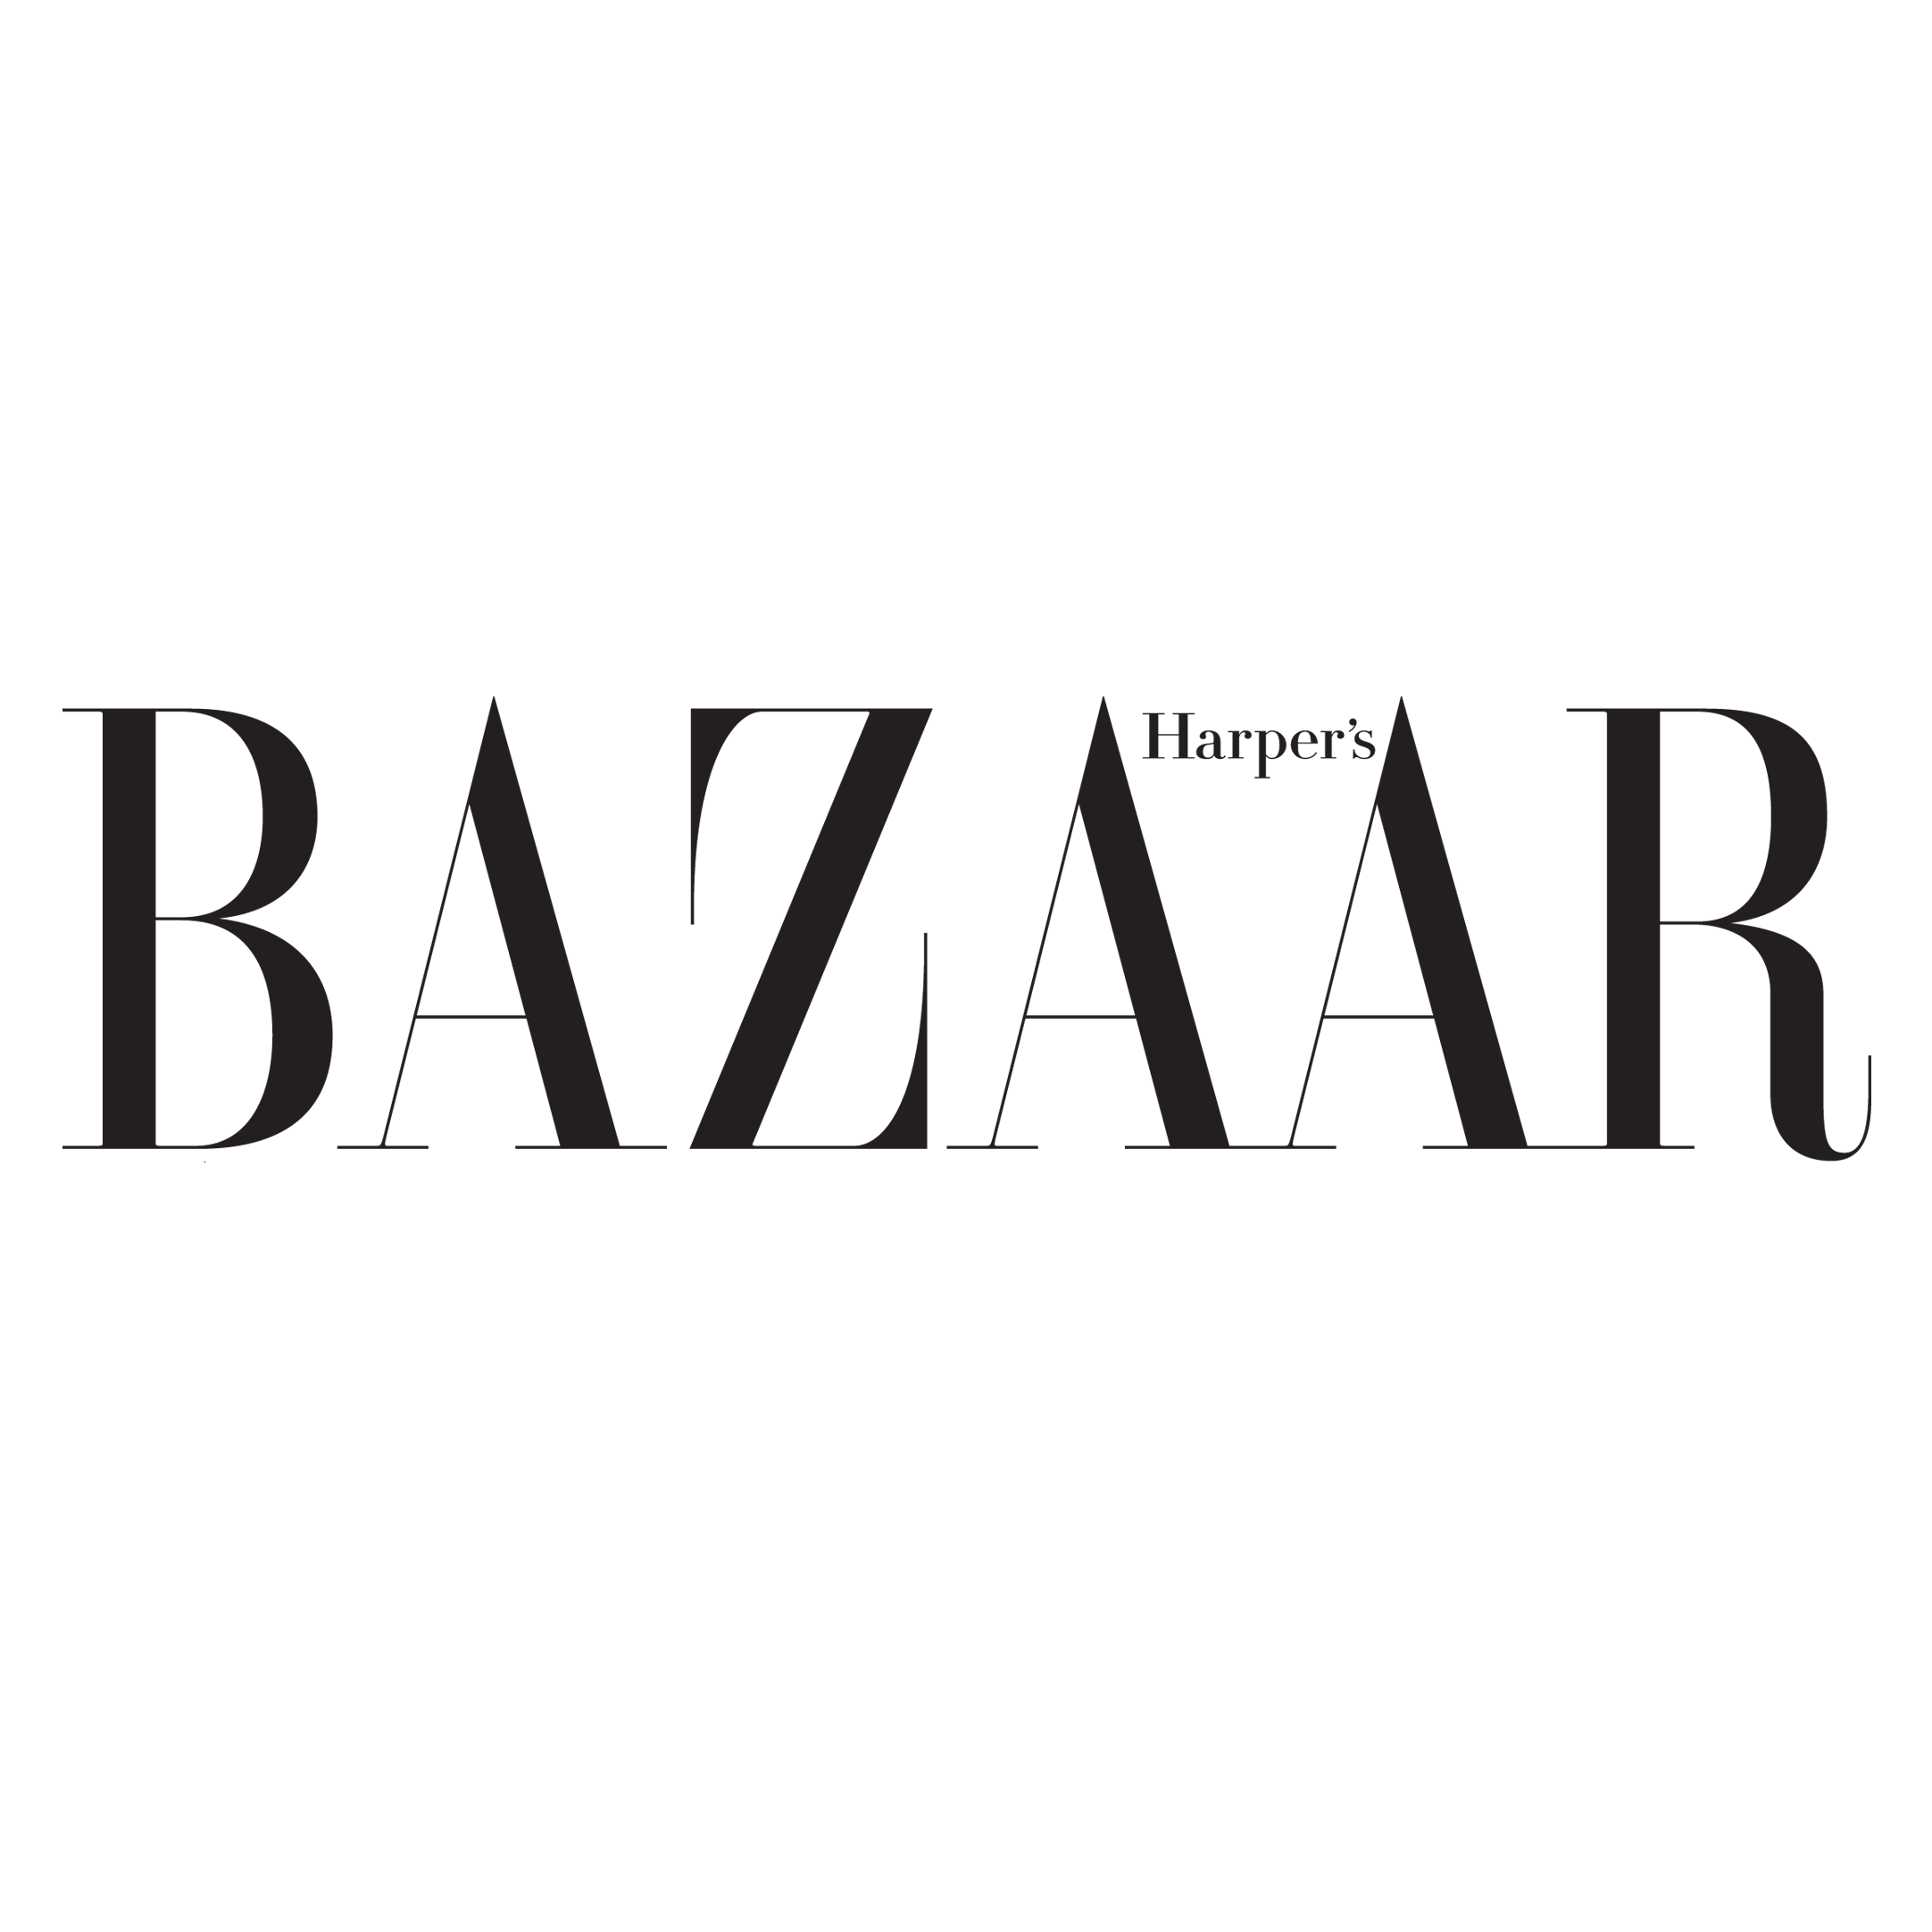 Victory Club in Harper's Bazaar